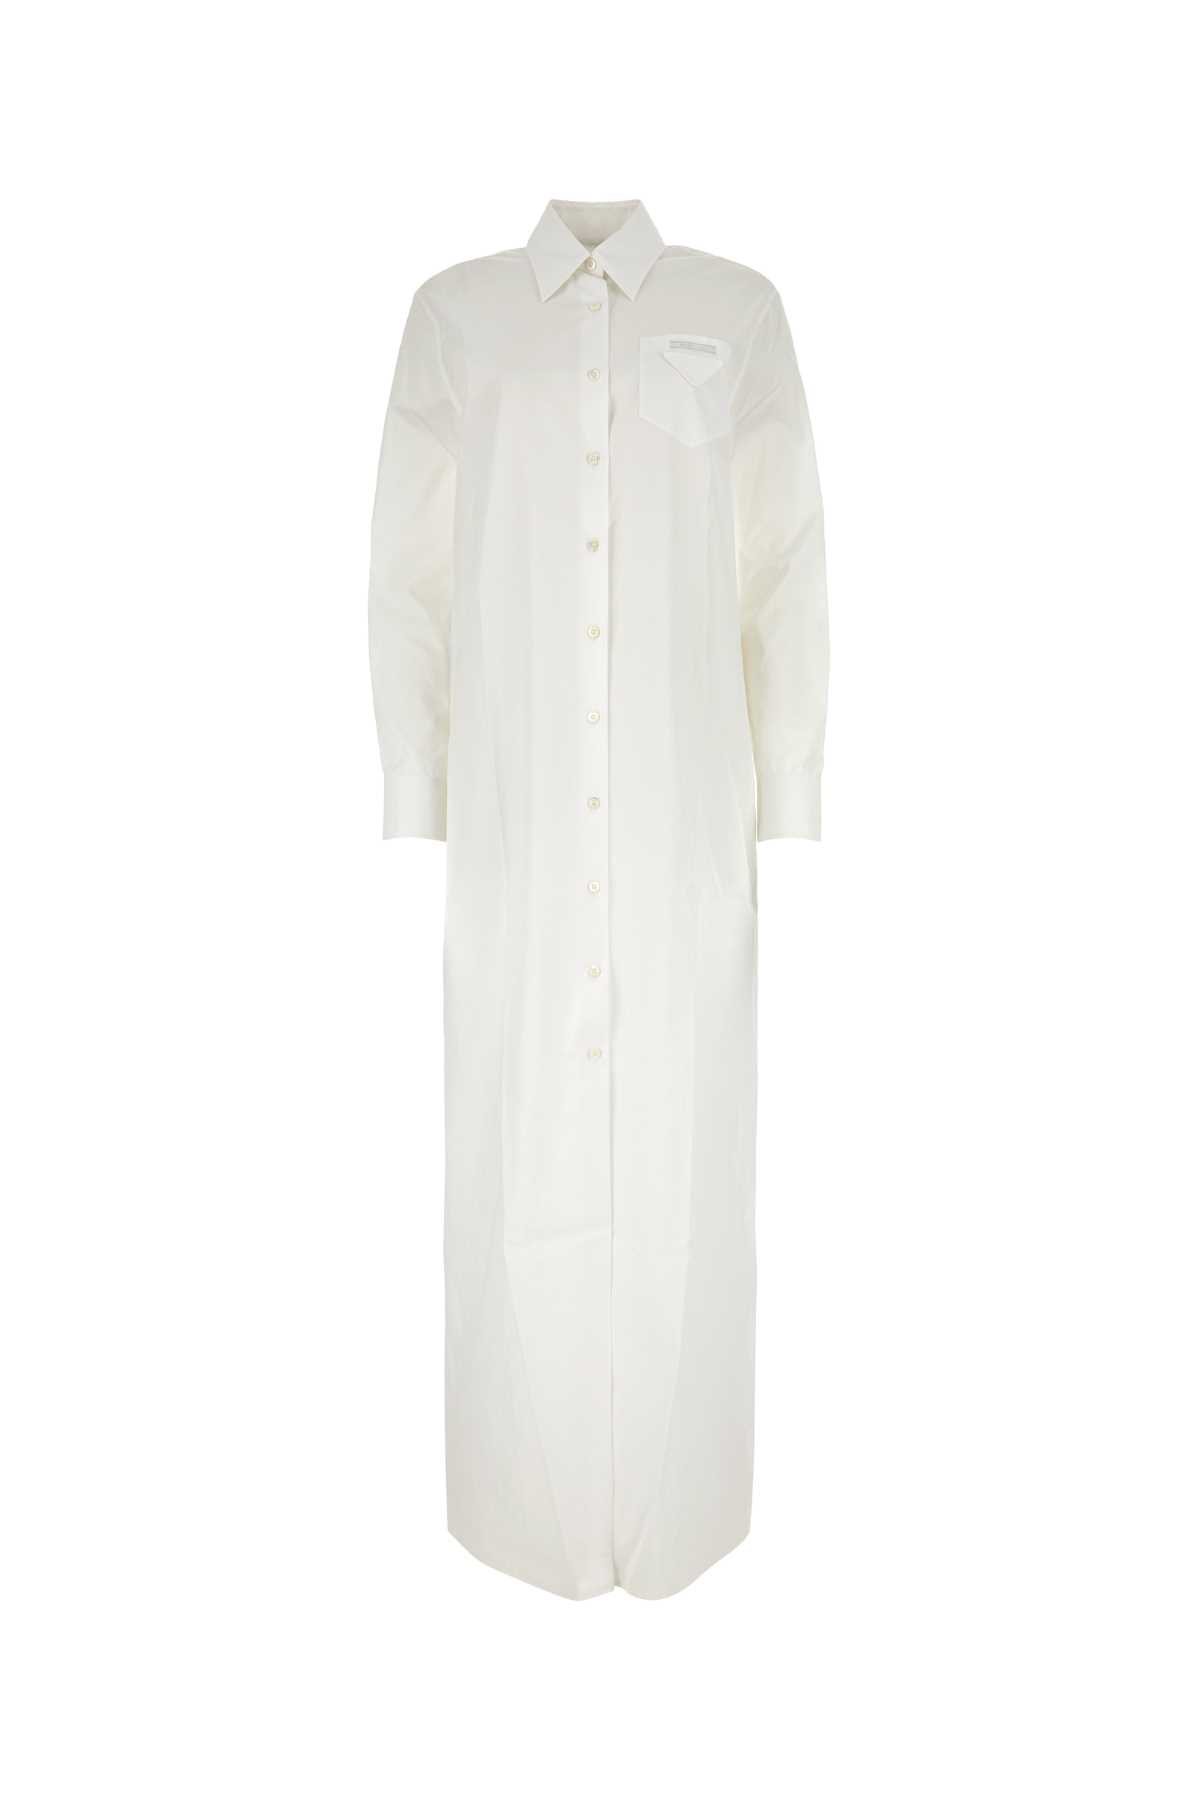 Prada White Cotton Shirt Dress